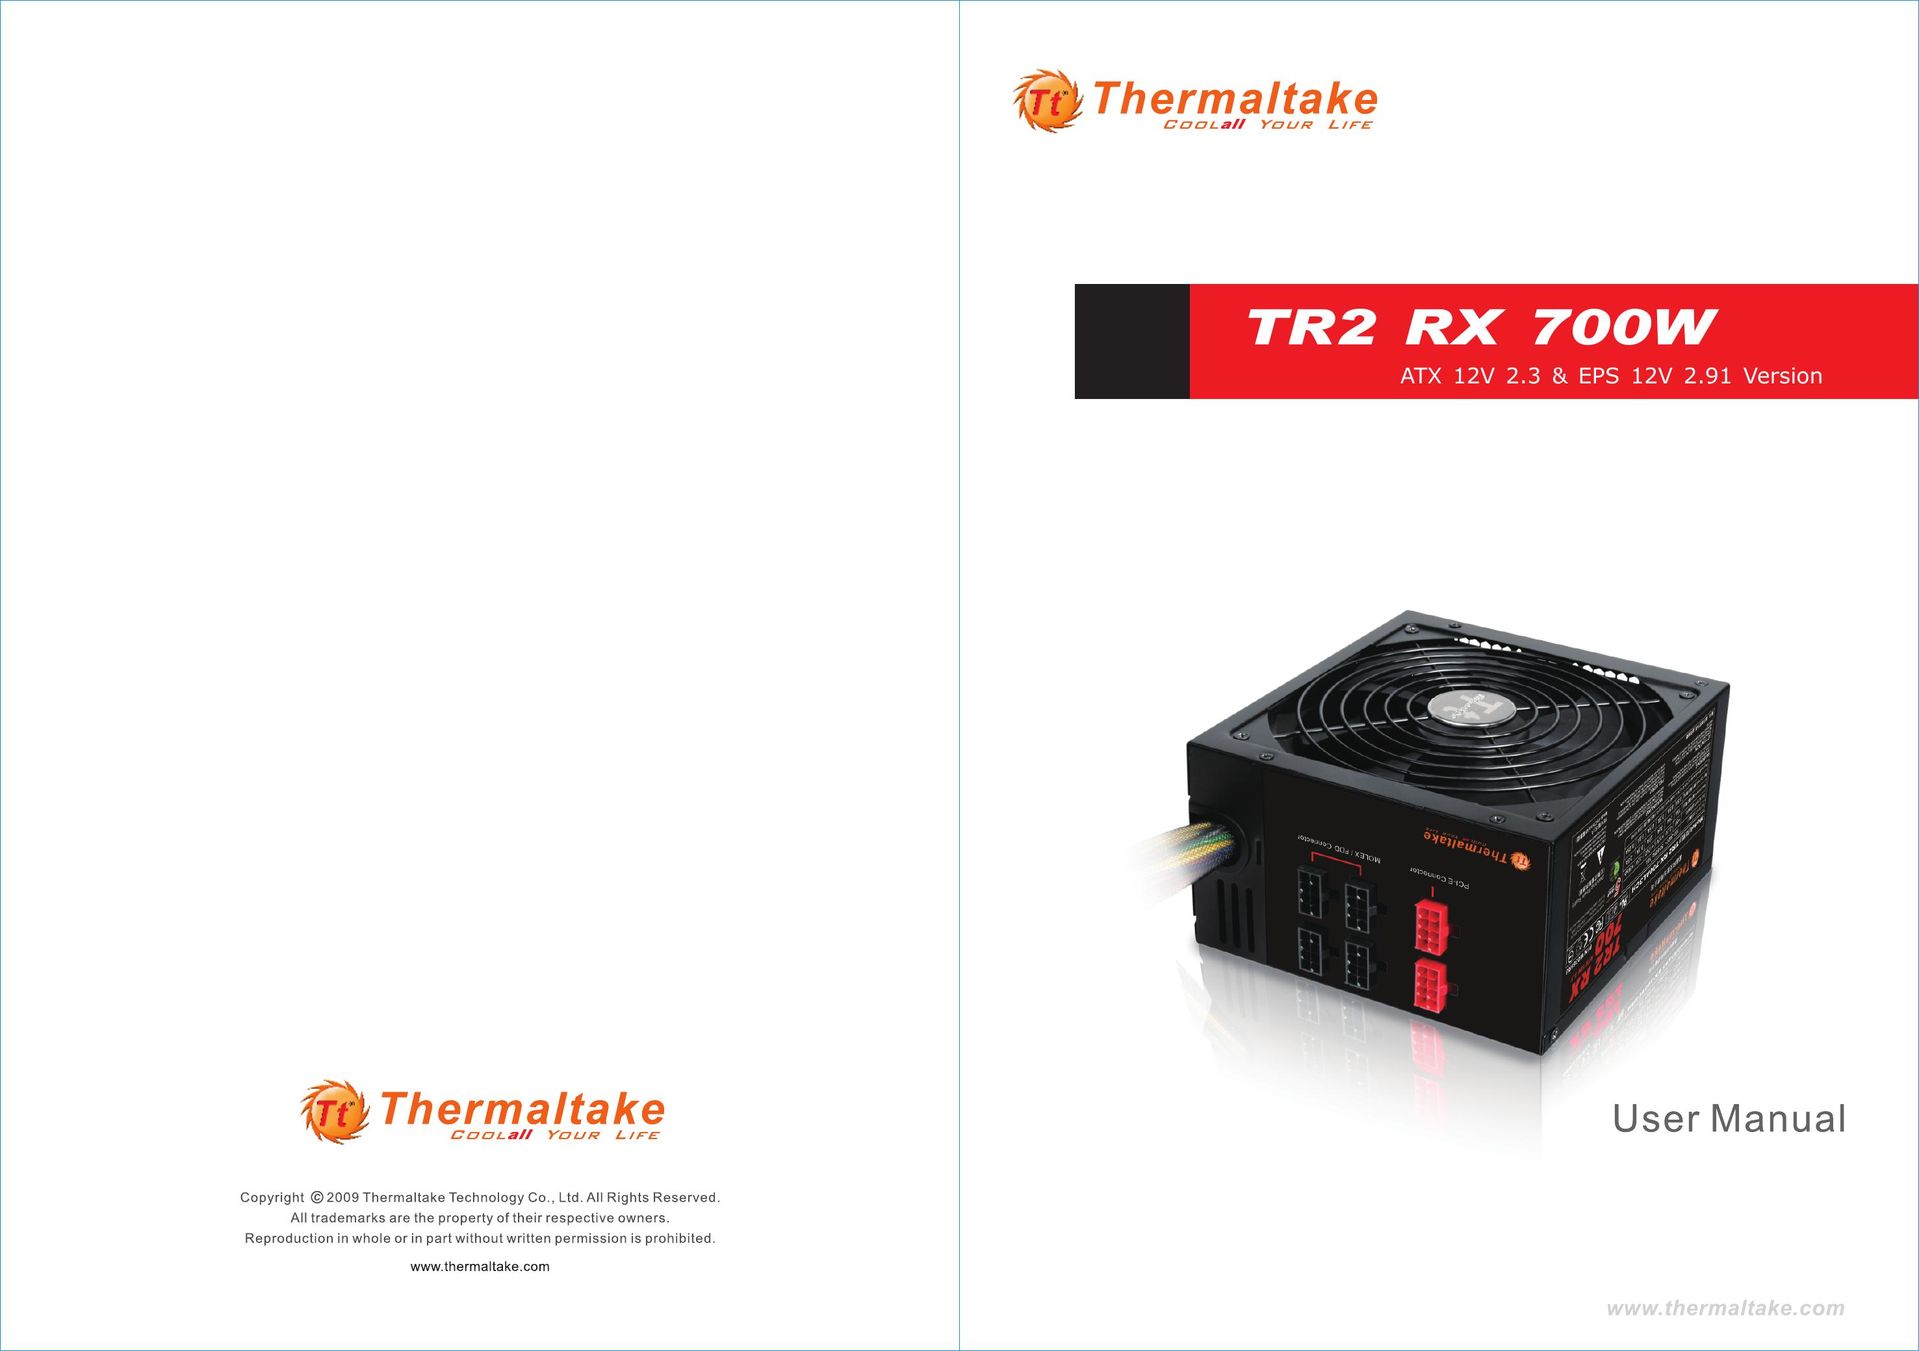 Thermaltake ATX 12V 2.3 Power Supply User Manual